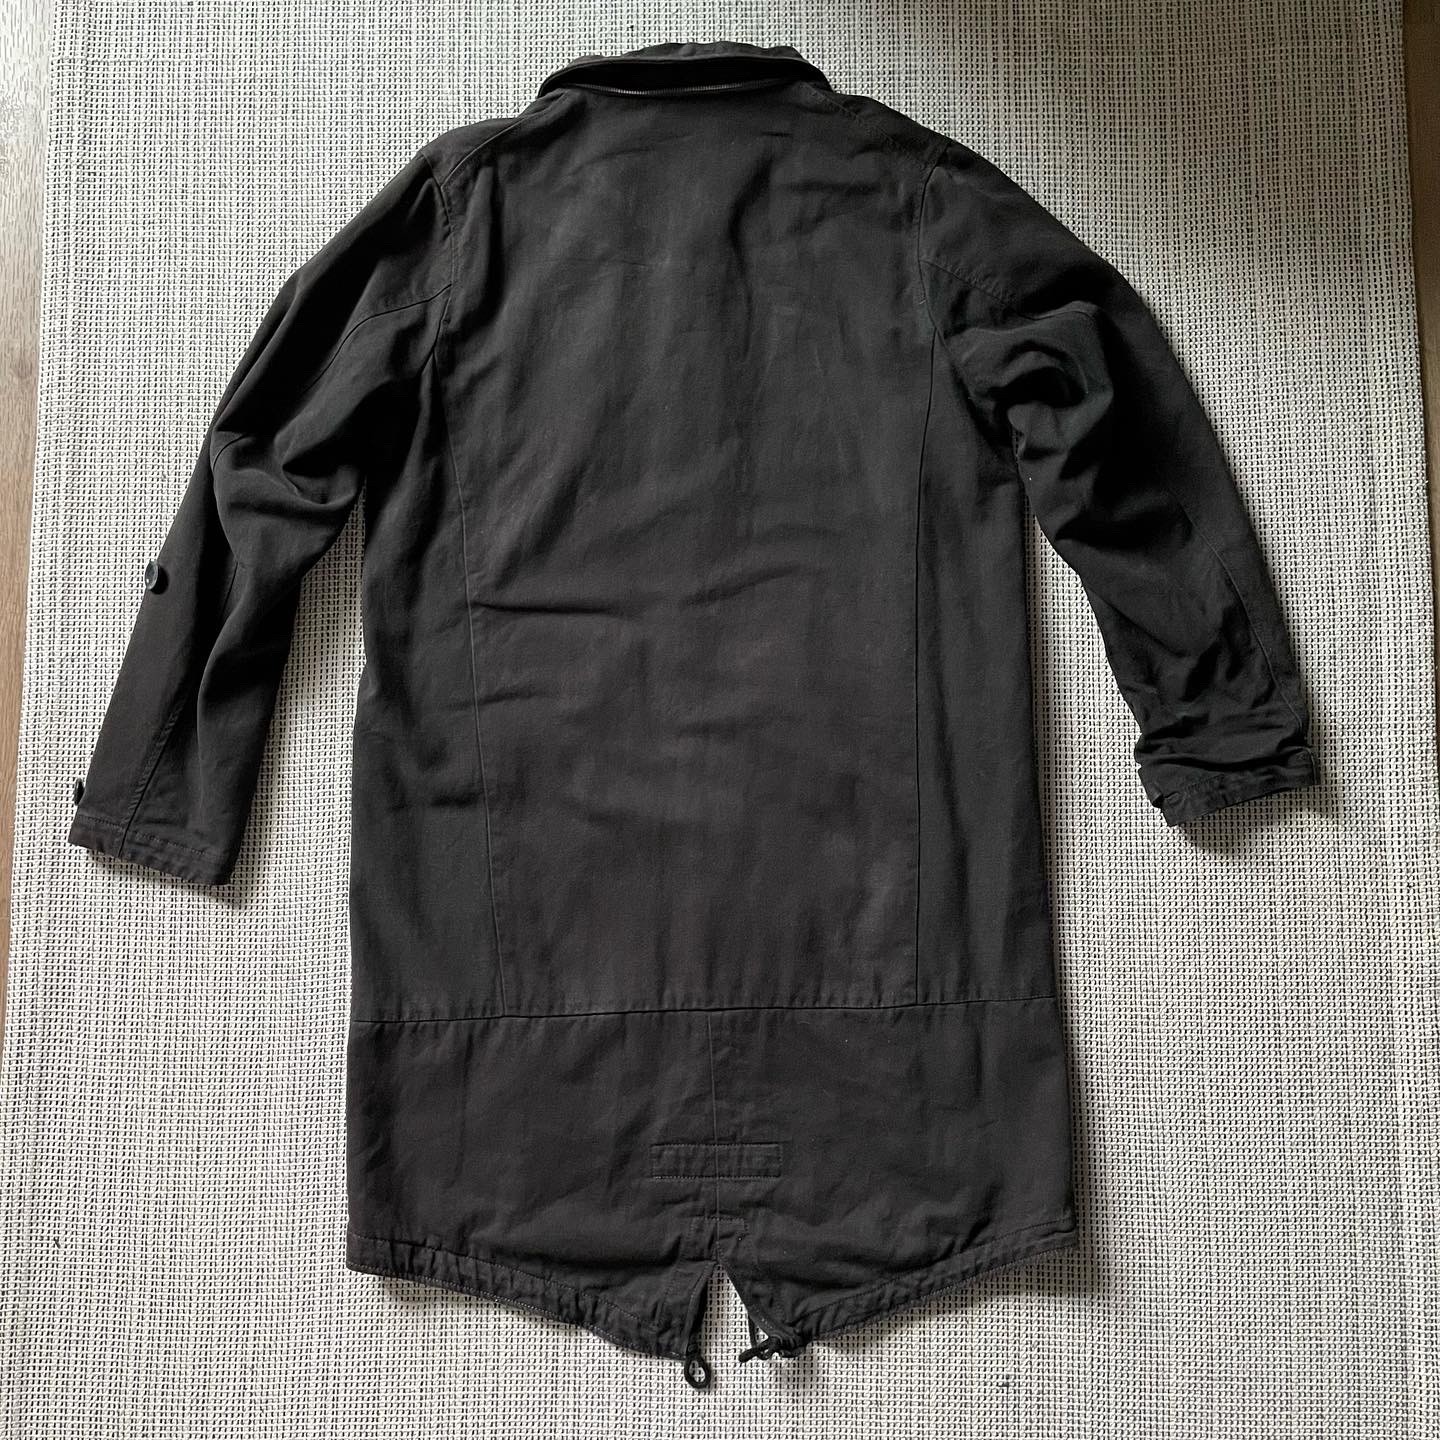 AW11 wanderer coat chino cloth charcoal grey cotton tencel - 6